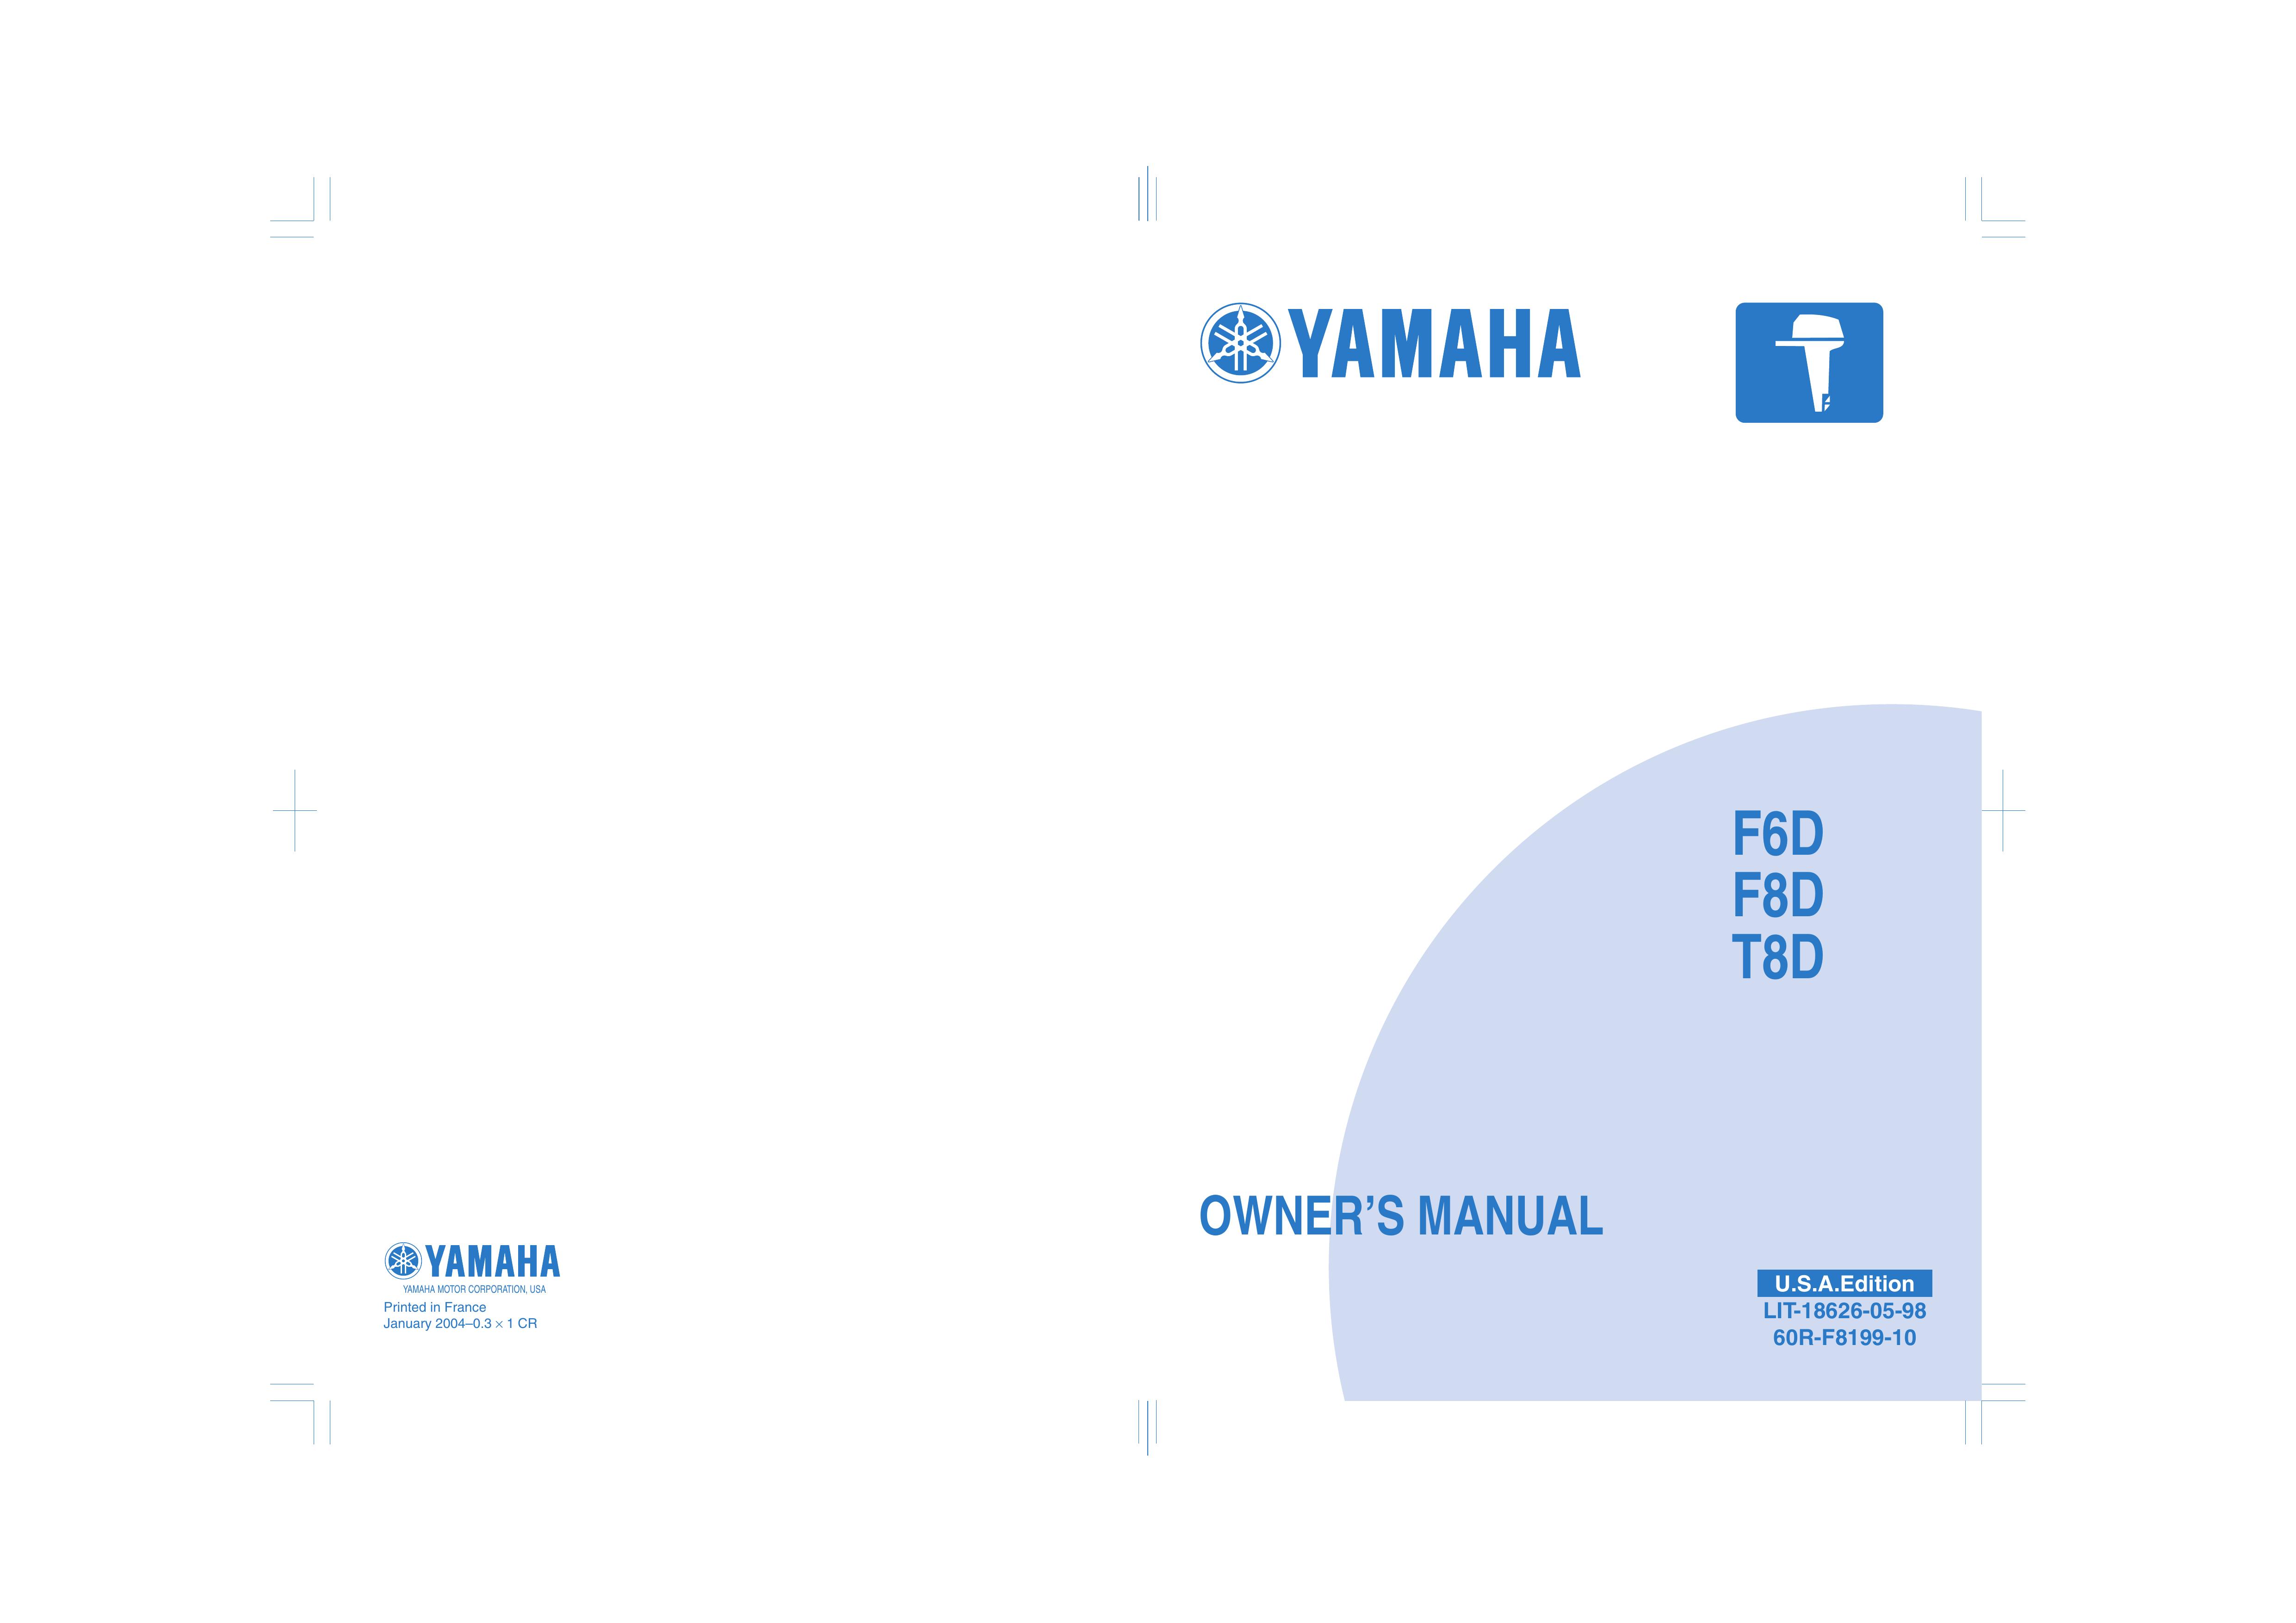 Yamaha F8D Outboard Motor User Manual